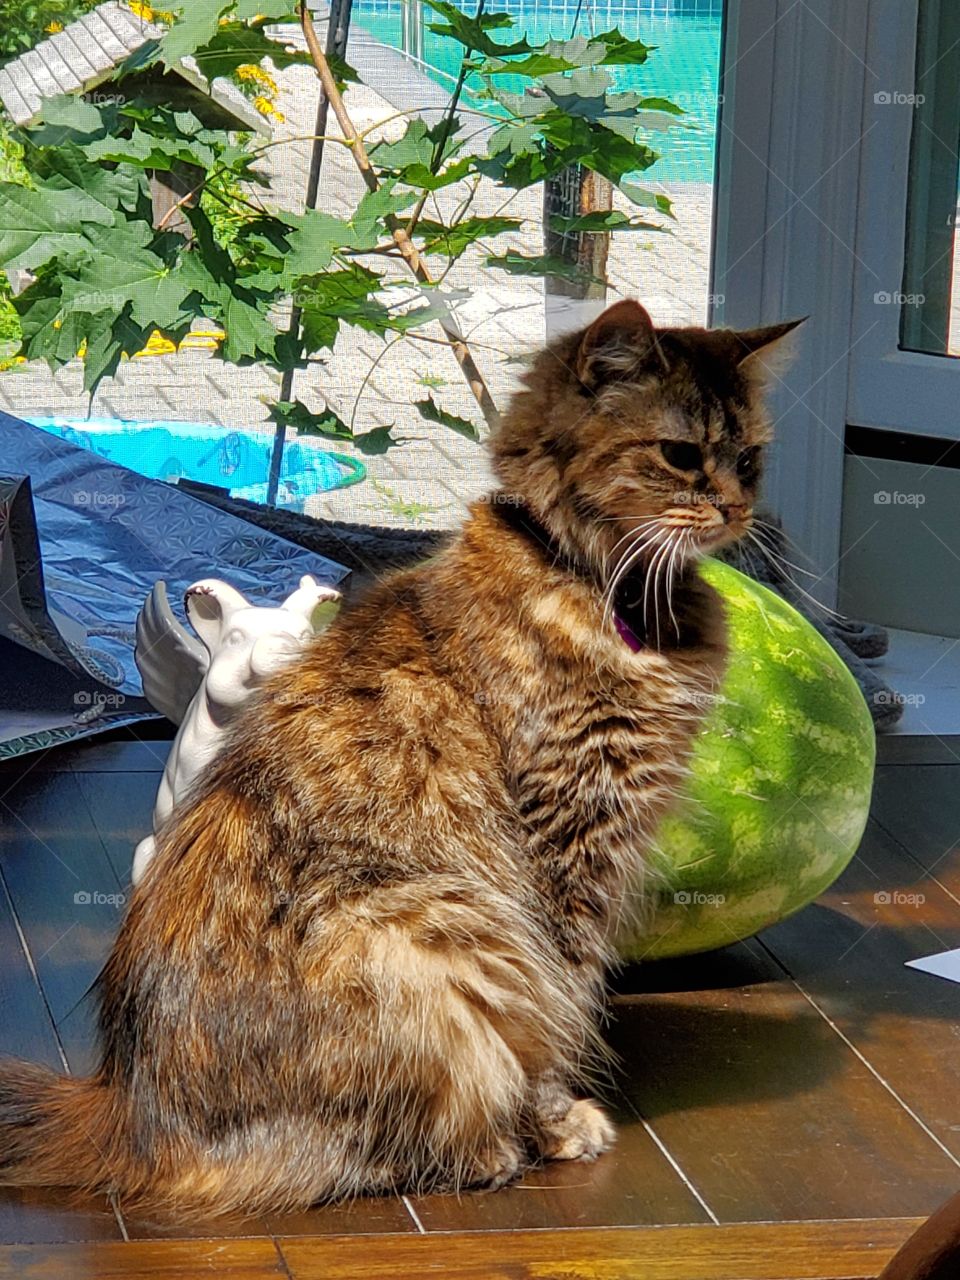 Cat watermelon pig statue